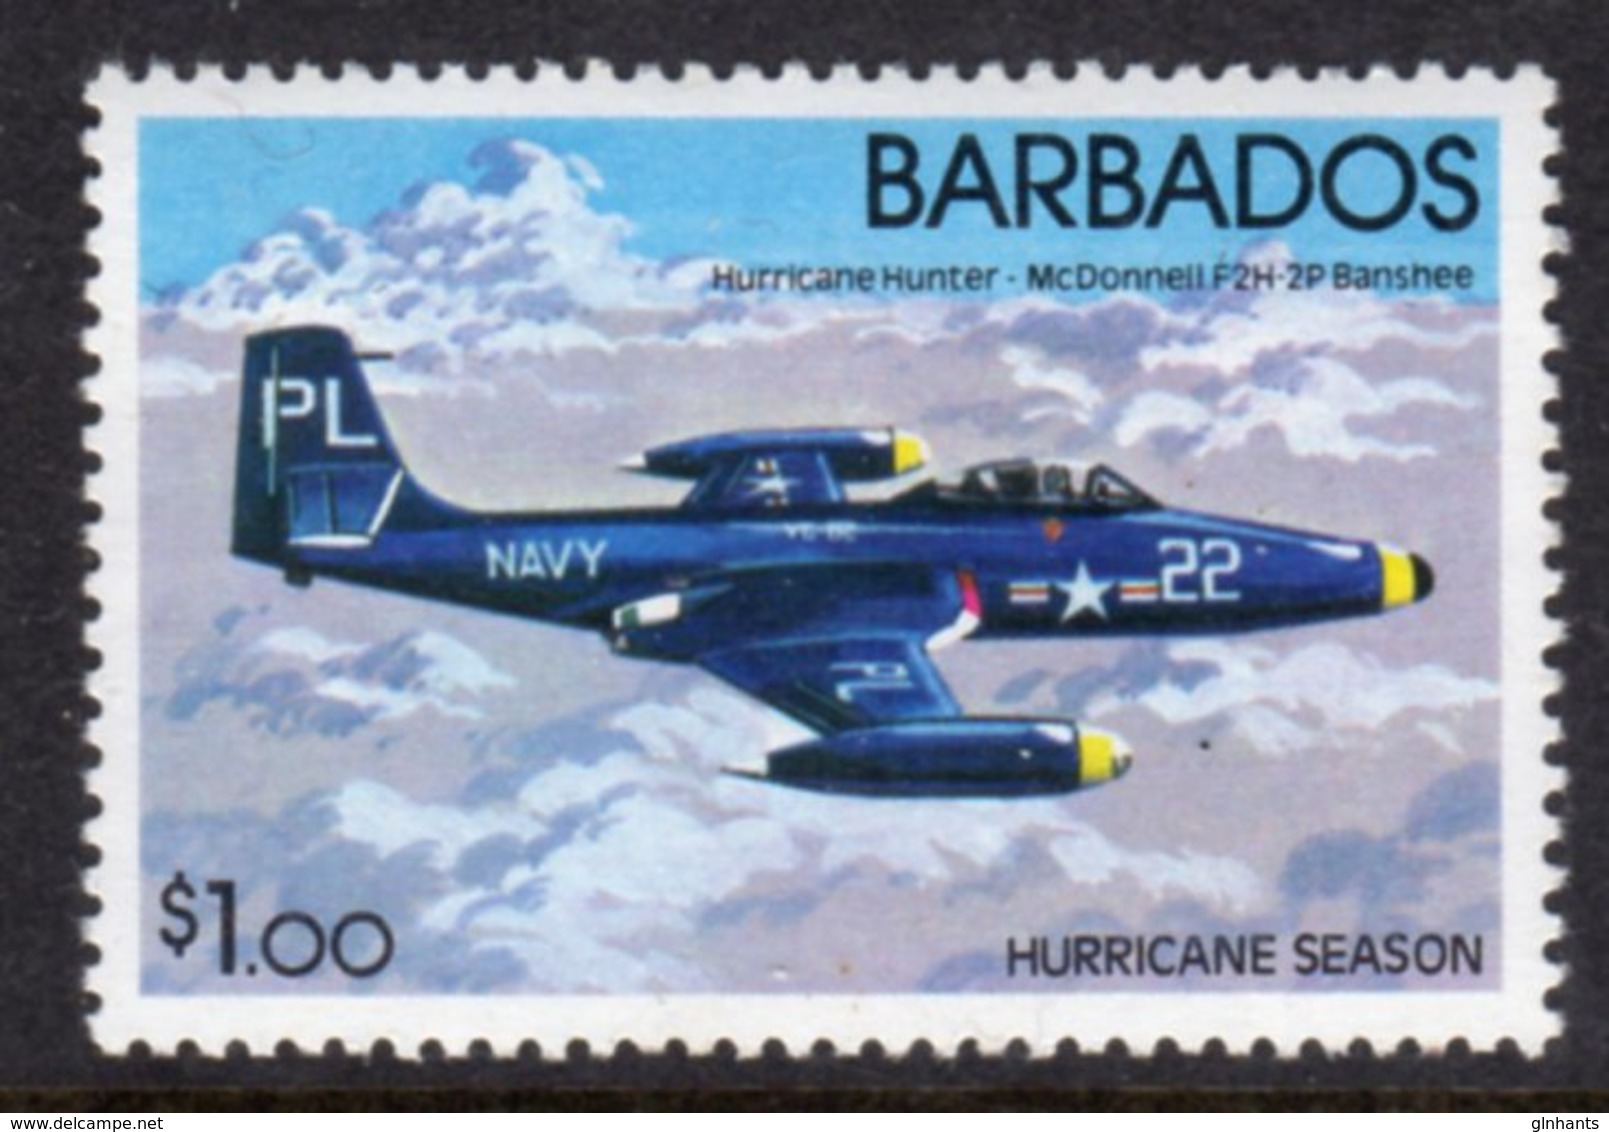 BARBADOS - 1981 $1 HURRICANE SEASON AIRCRAFT STAMP FINE MNH ** SG 688 - Barbados (1966-...)